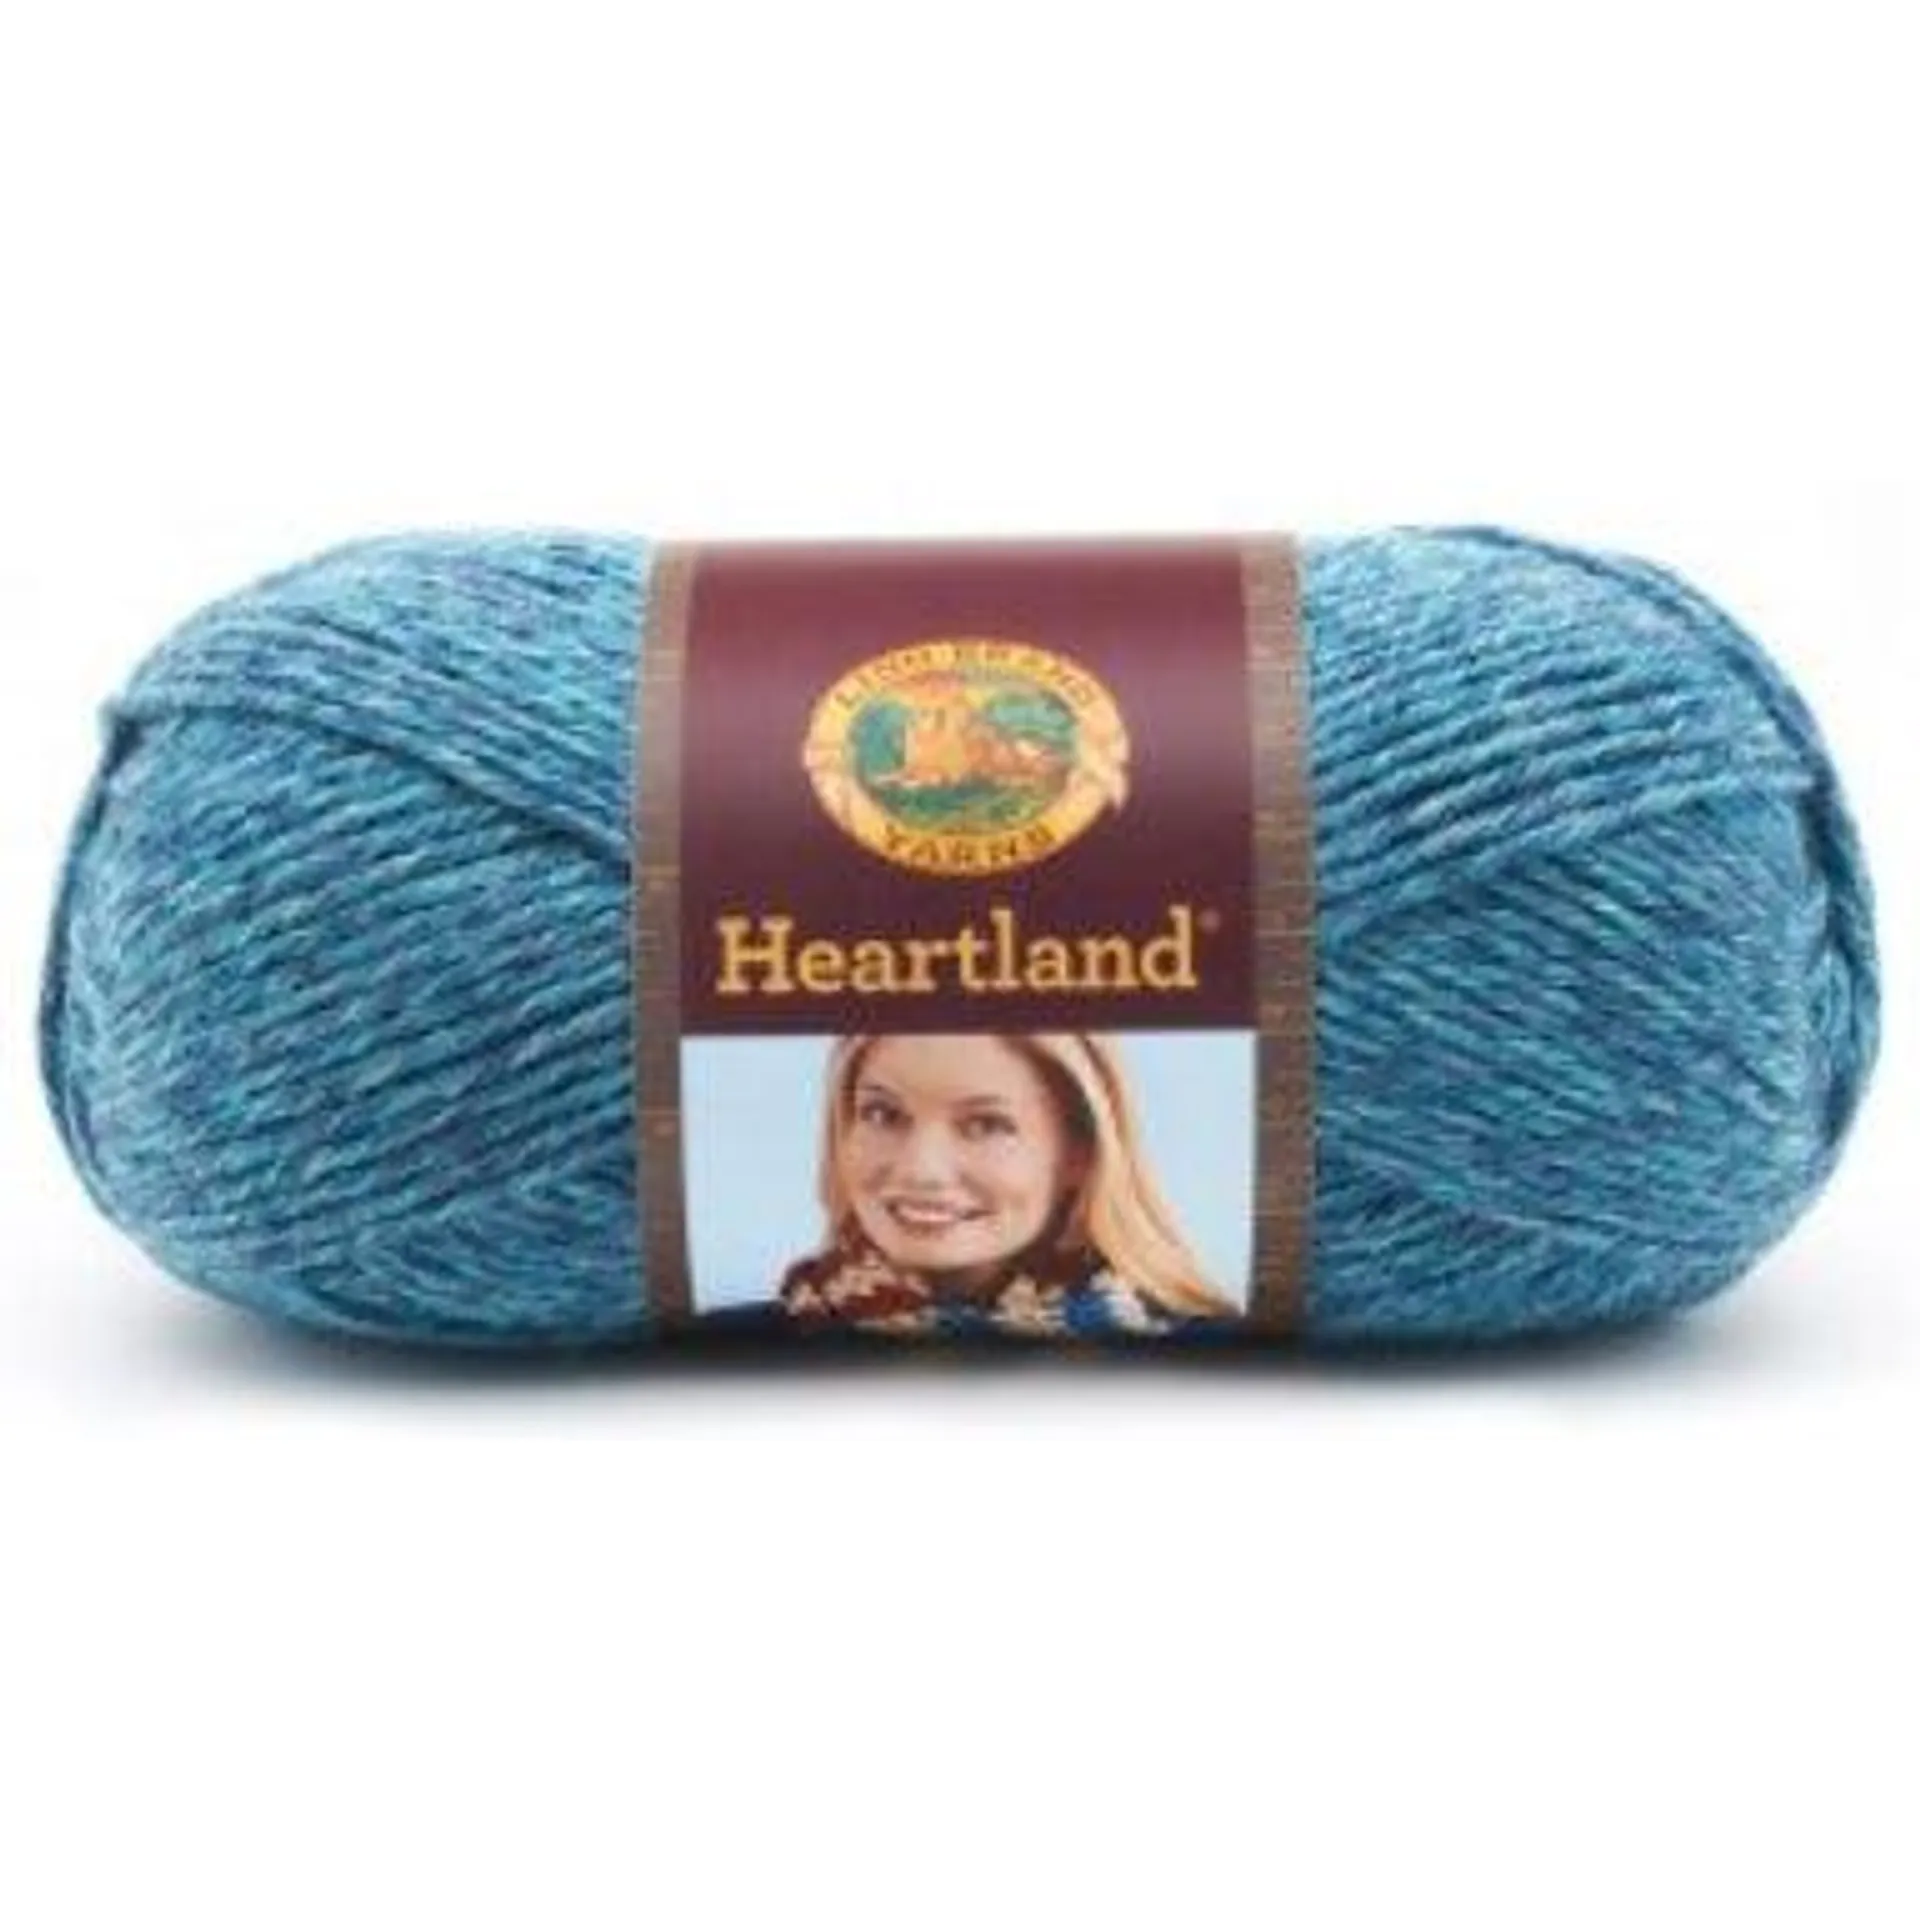 Heartland - 142g - Lion Brand